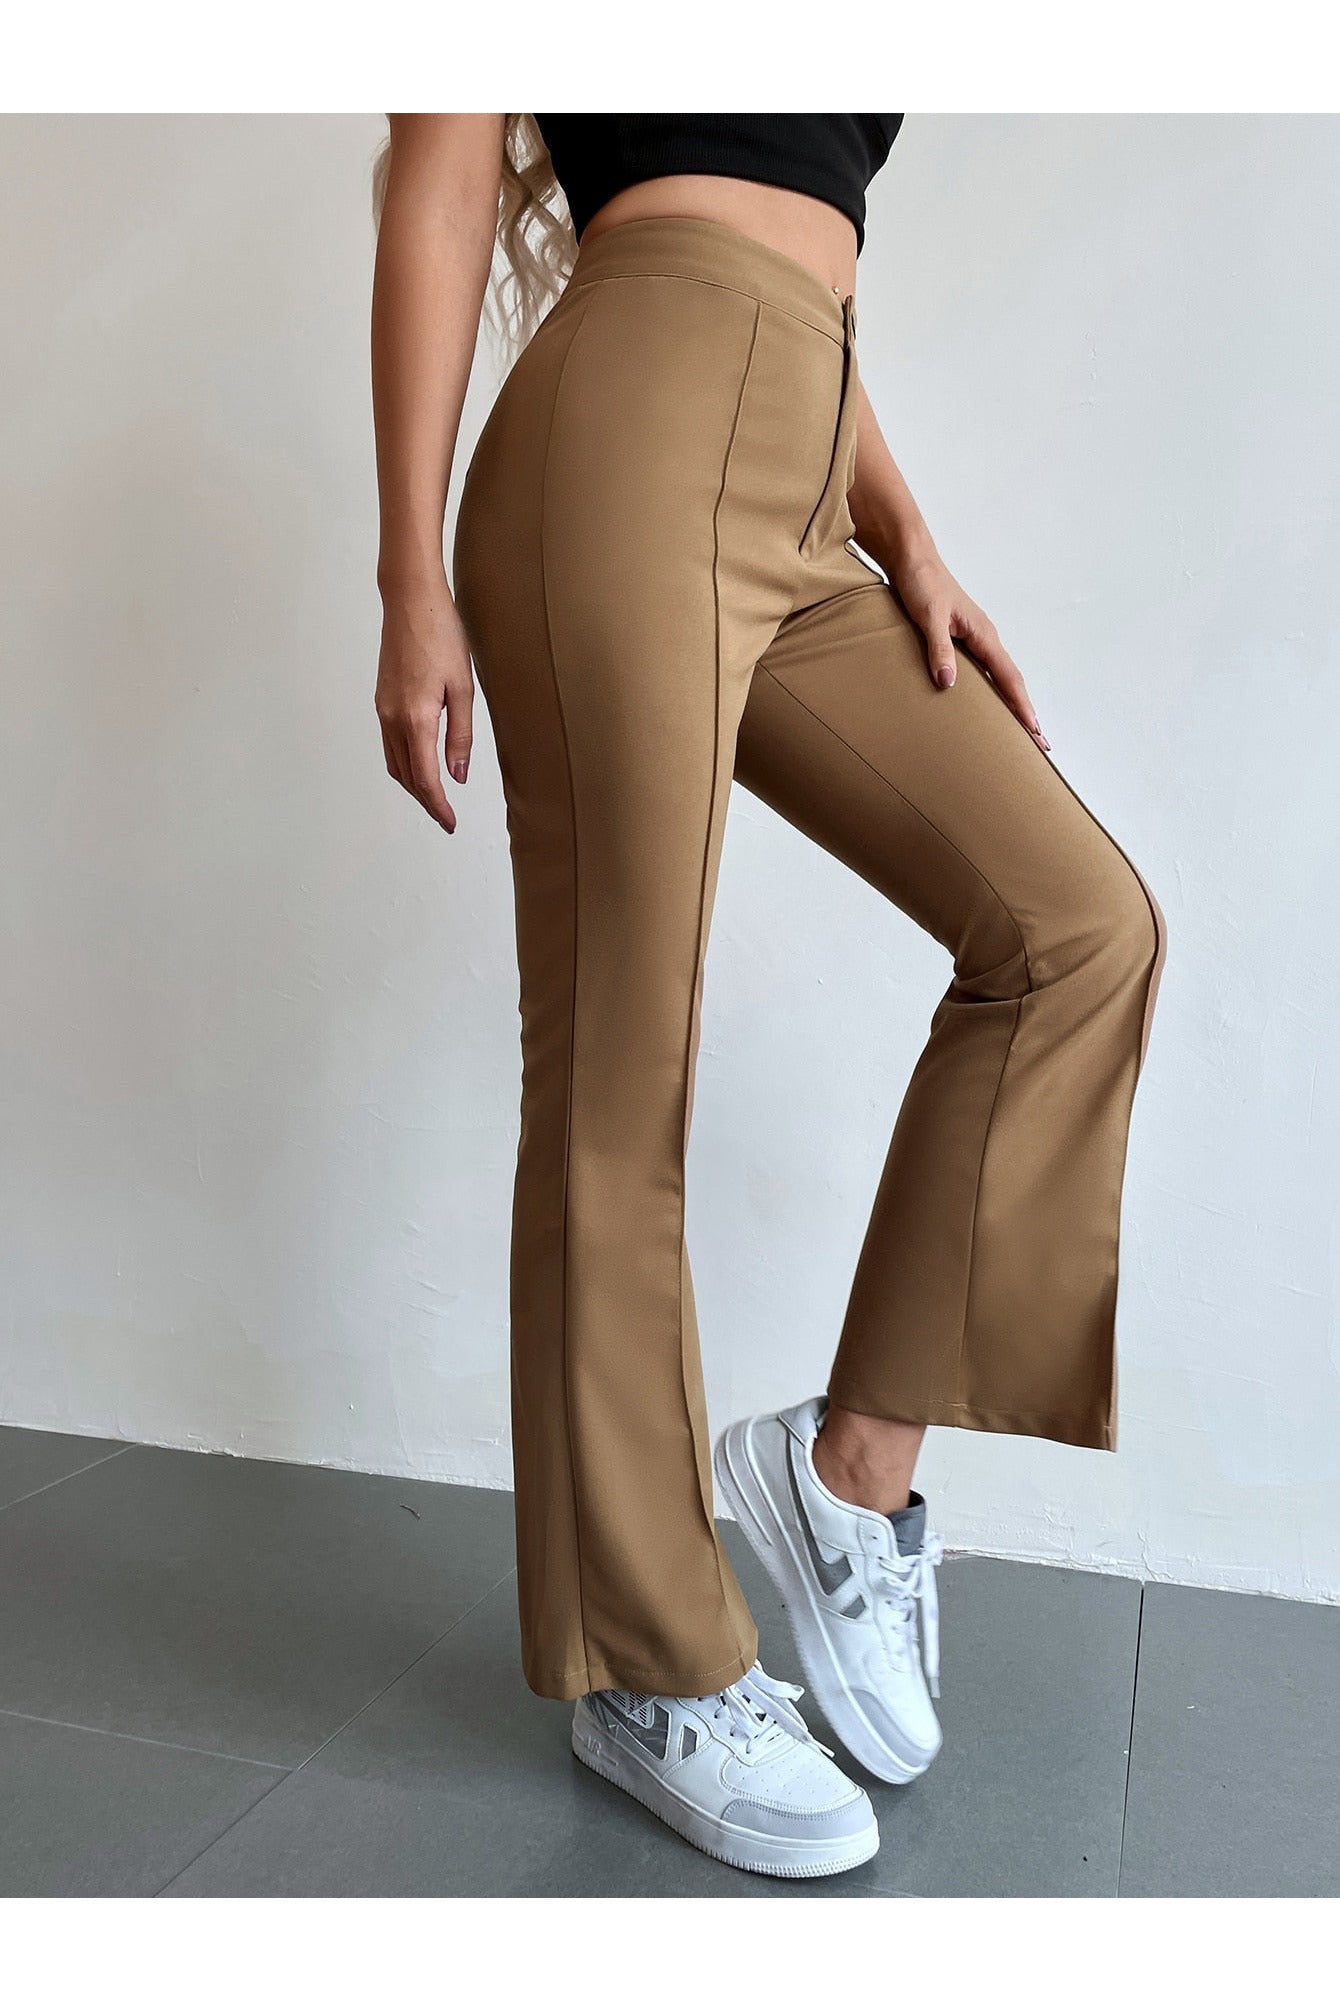 Buy Shein Seam Front High Waist Flare Leg Pants - Medium Brown in Pakistan